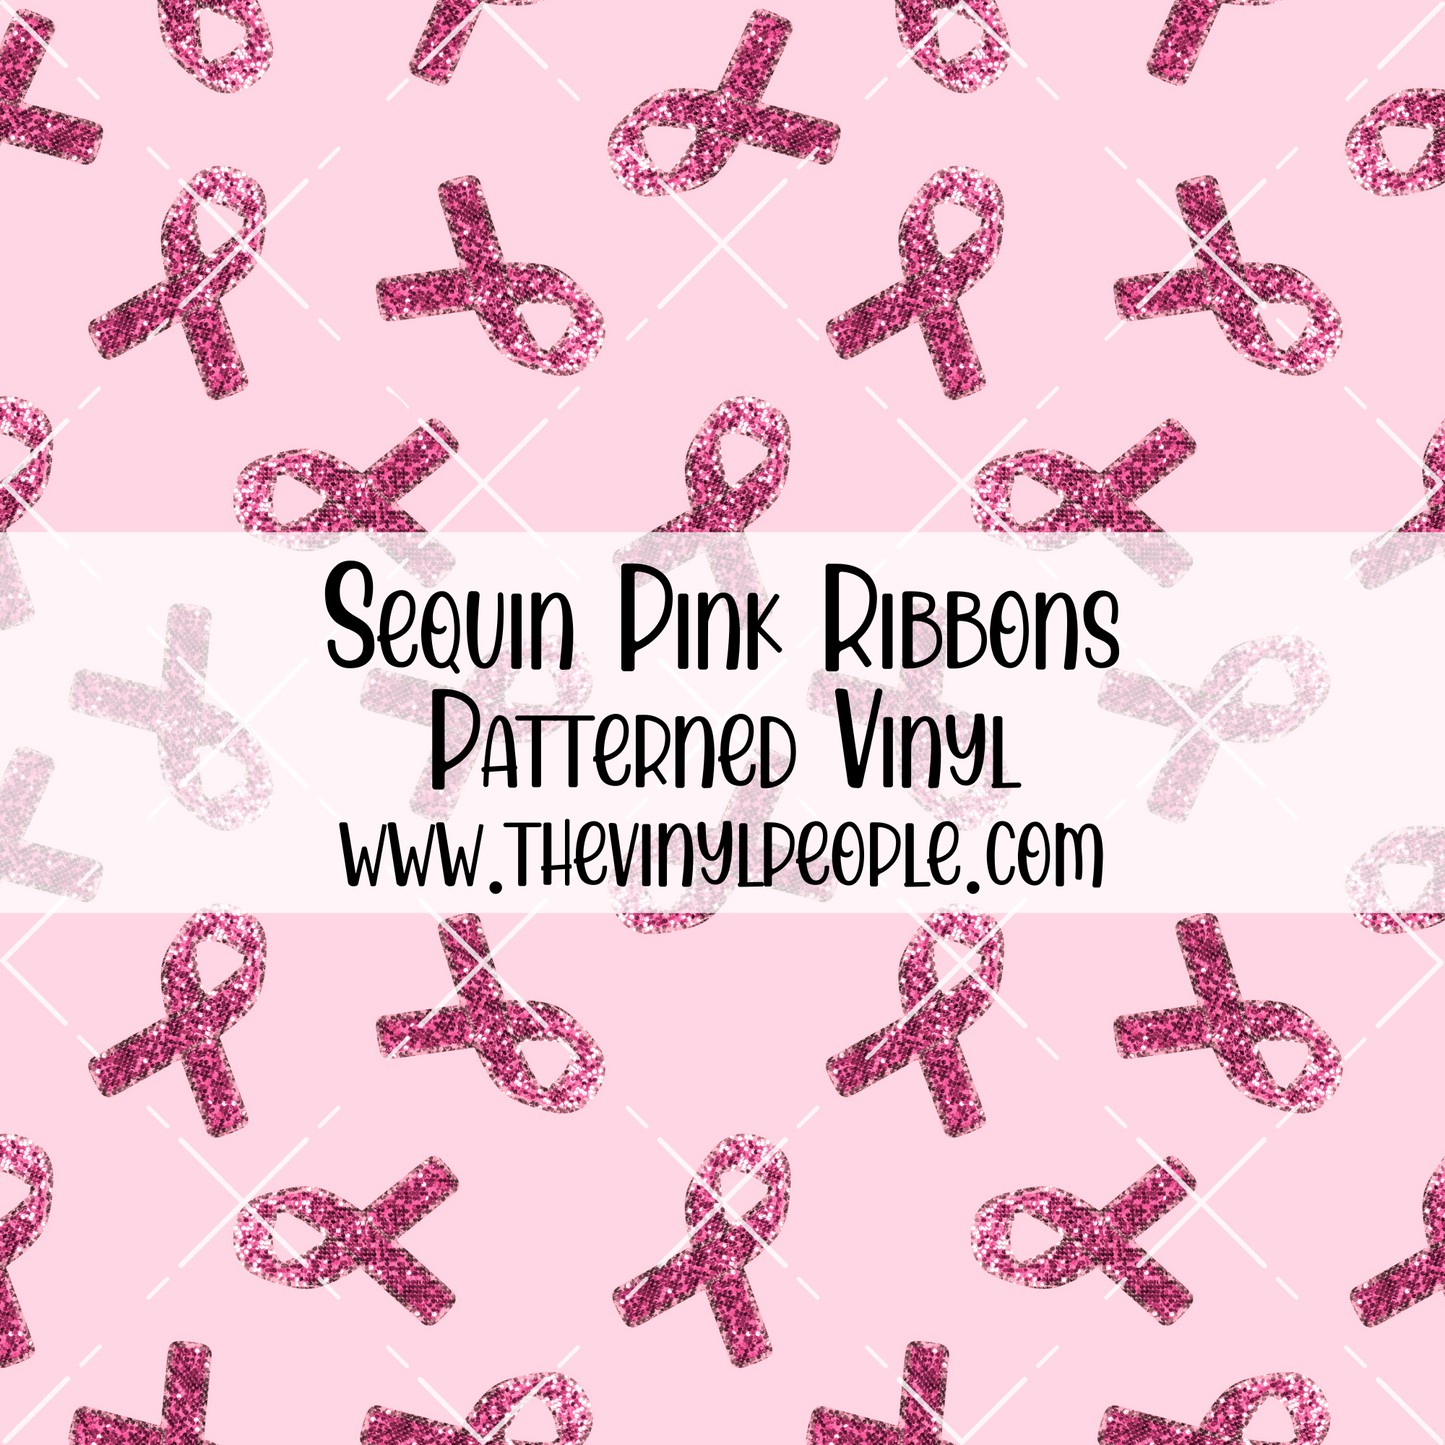 Sequin Pink Ribbons Patterned Vinyl